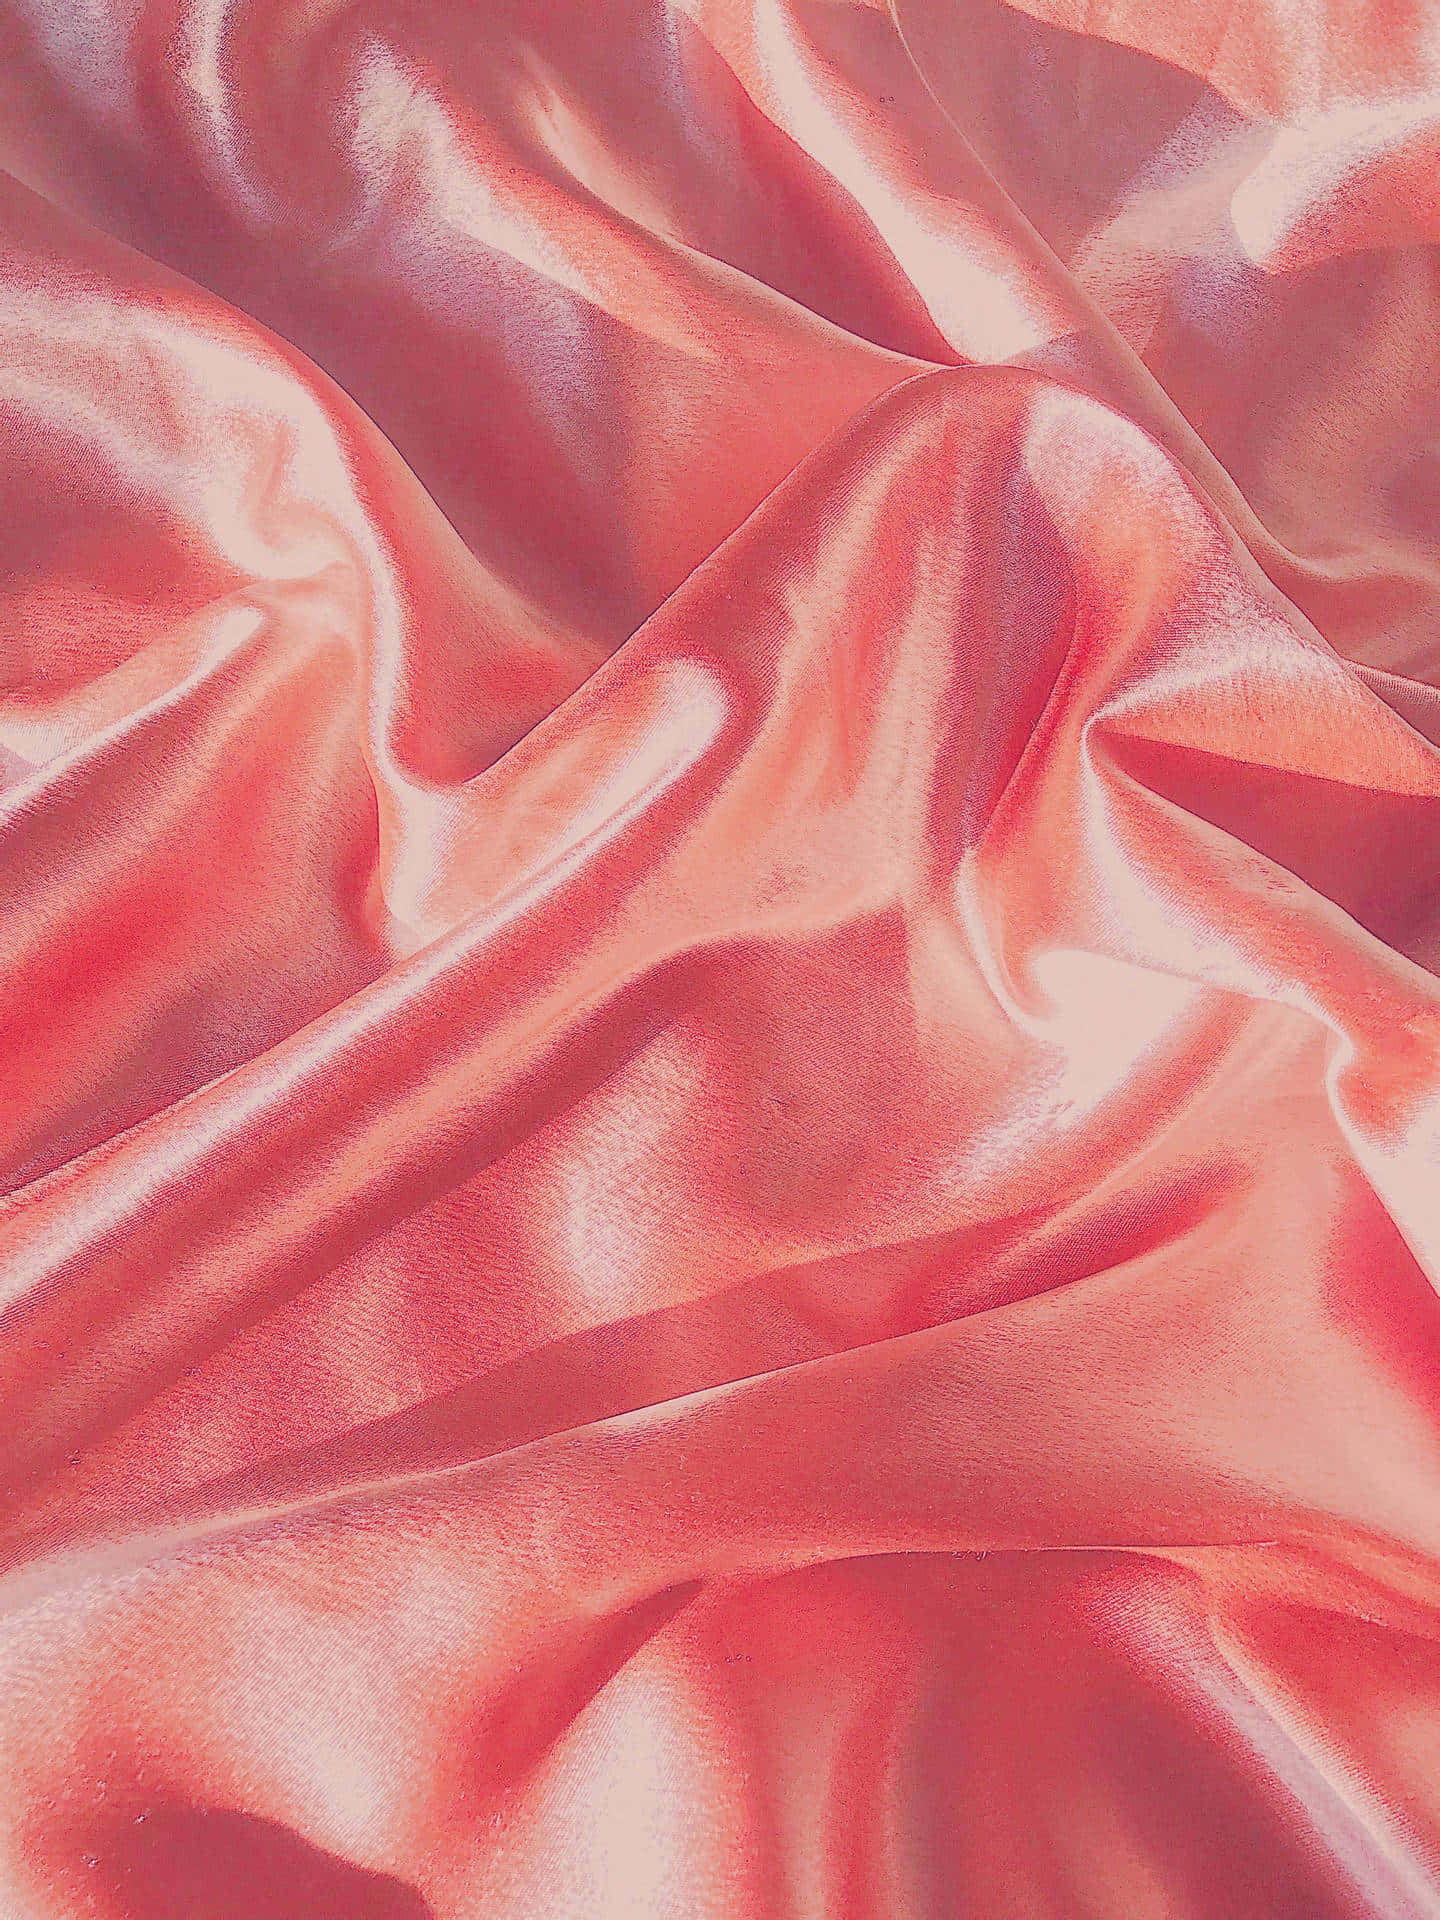 Light Red Satin Fabric Texture Wallpaper